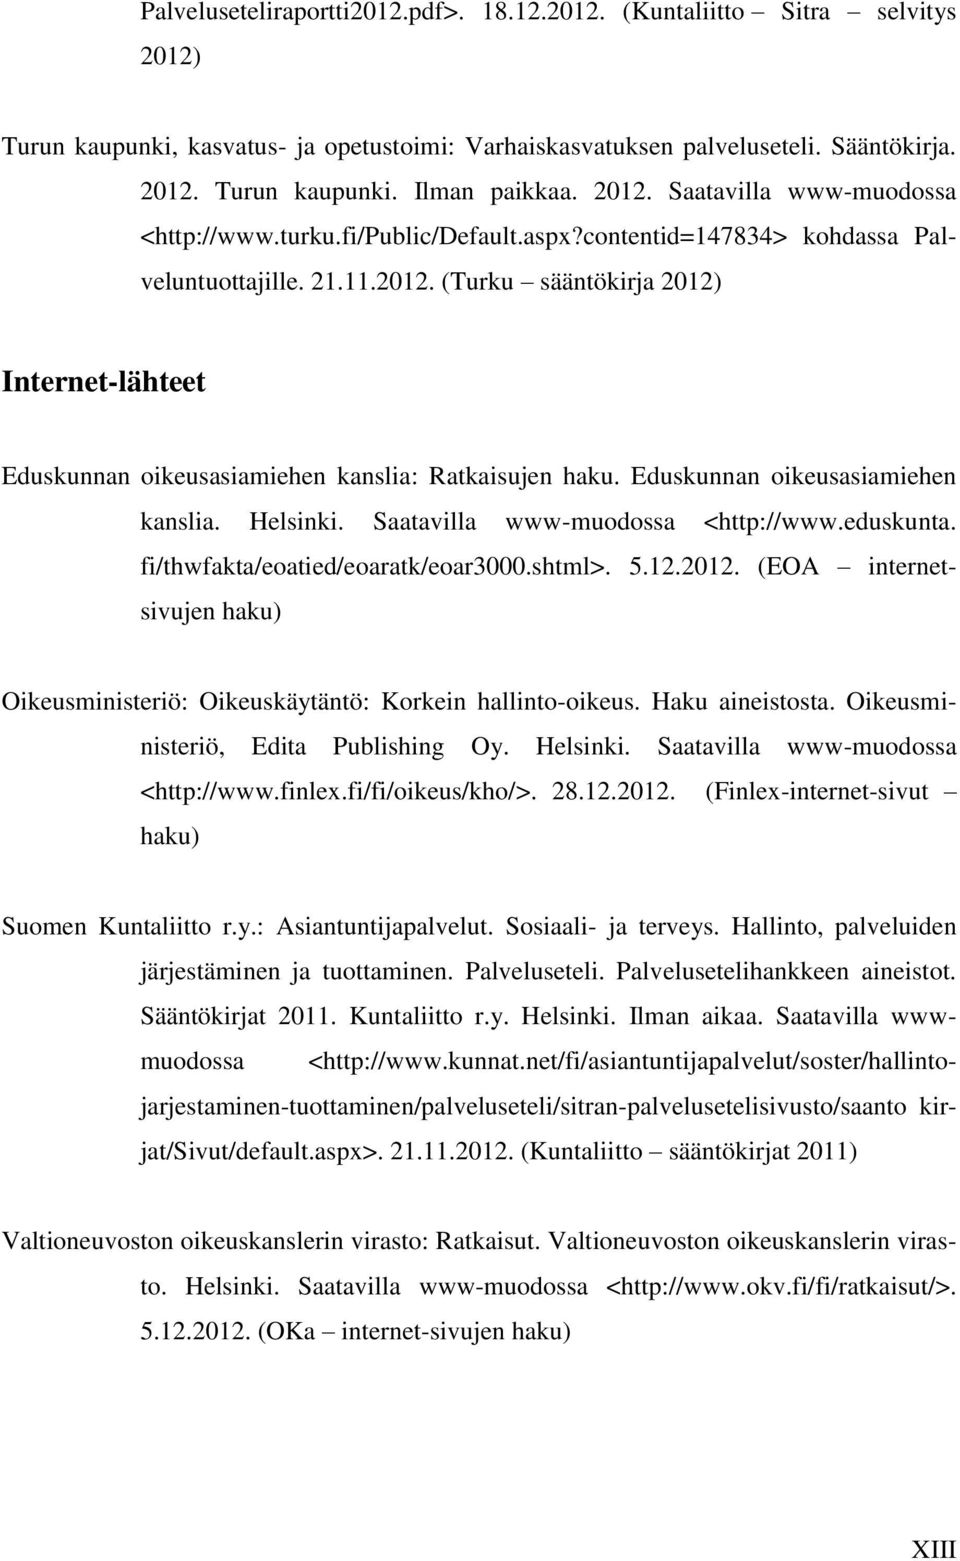 Eduskunnan oikeusasiamiehen kanslia. Helsinki. Saatavilla www-muodossa <http://www.eduskunta. fi/thwfakta/eoatied/eoaratk/eoar3000.shtml>. 5.12.2012.